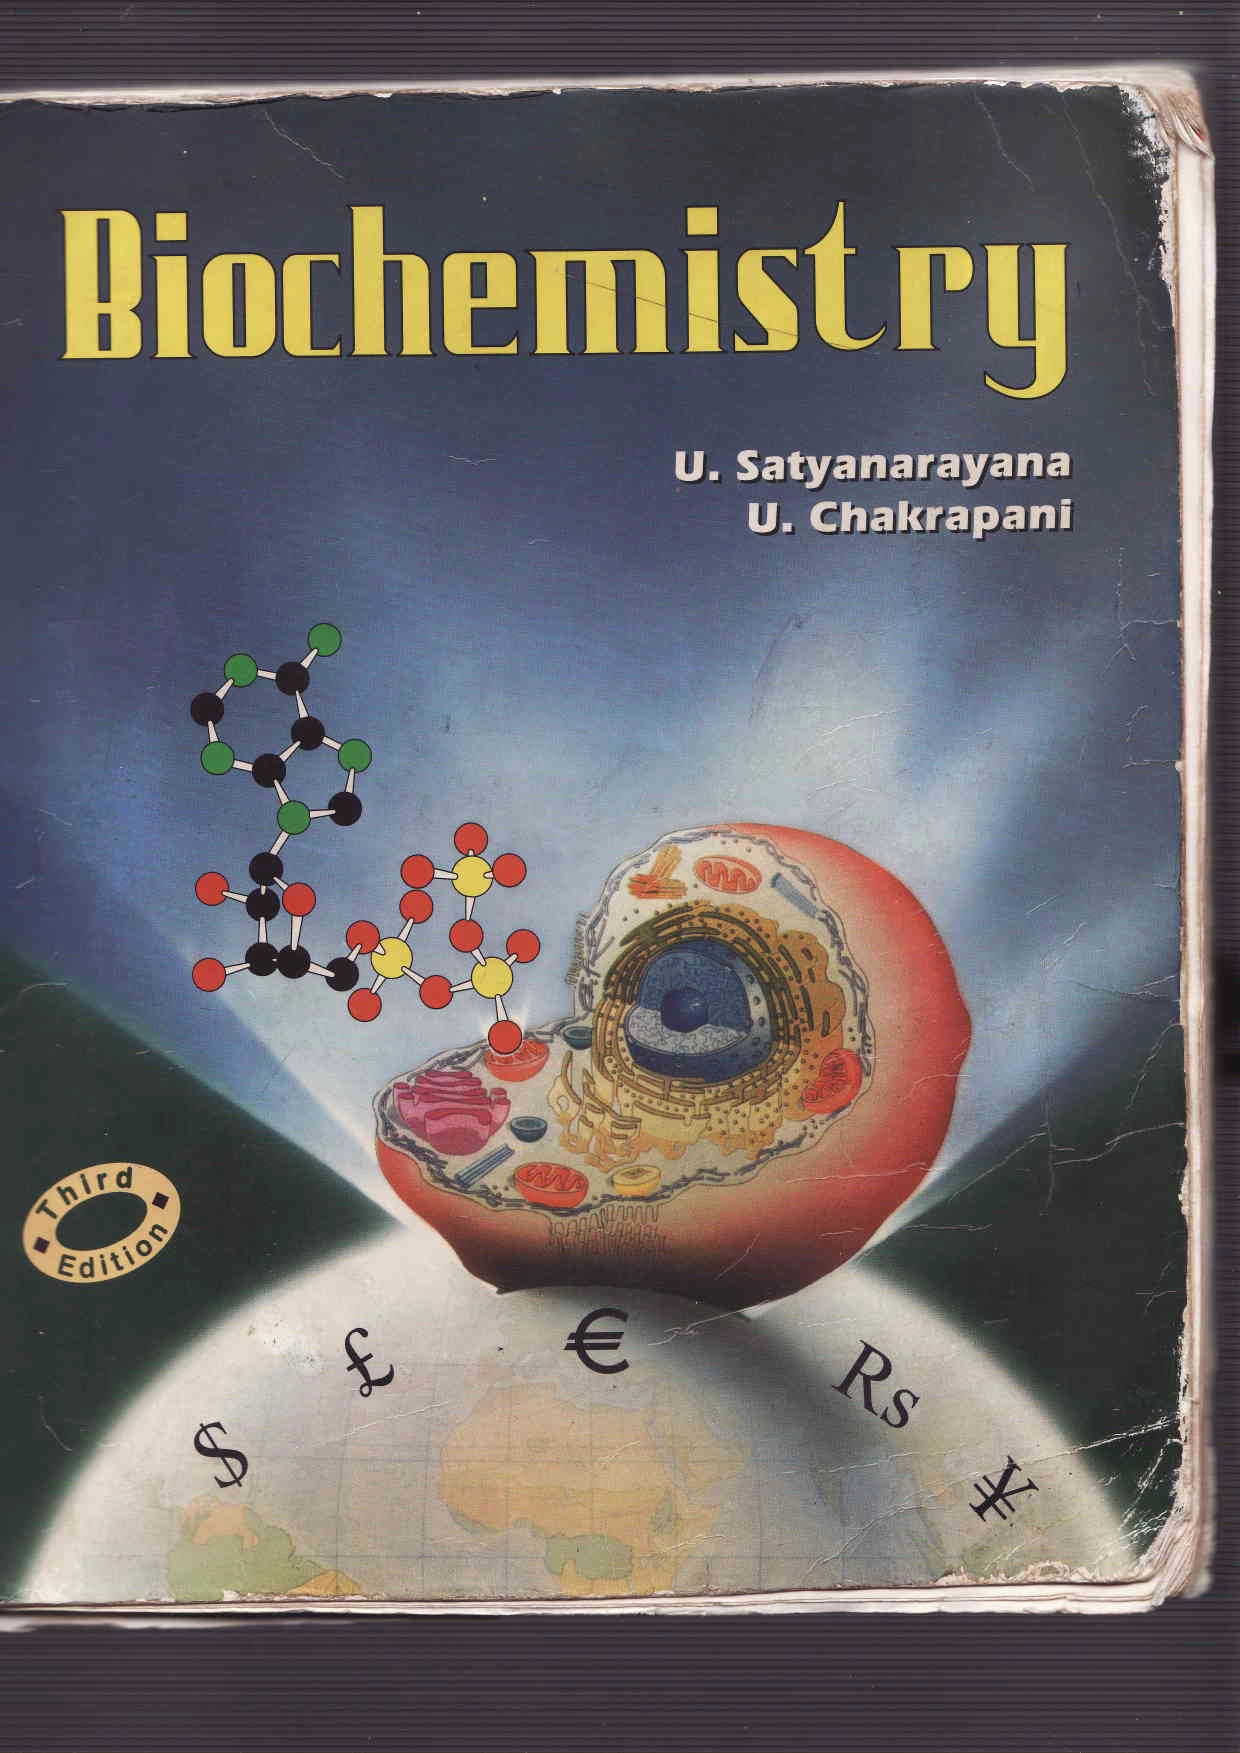 Satyanaryana's Biochemistry pdf book free download